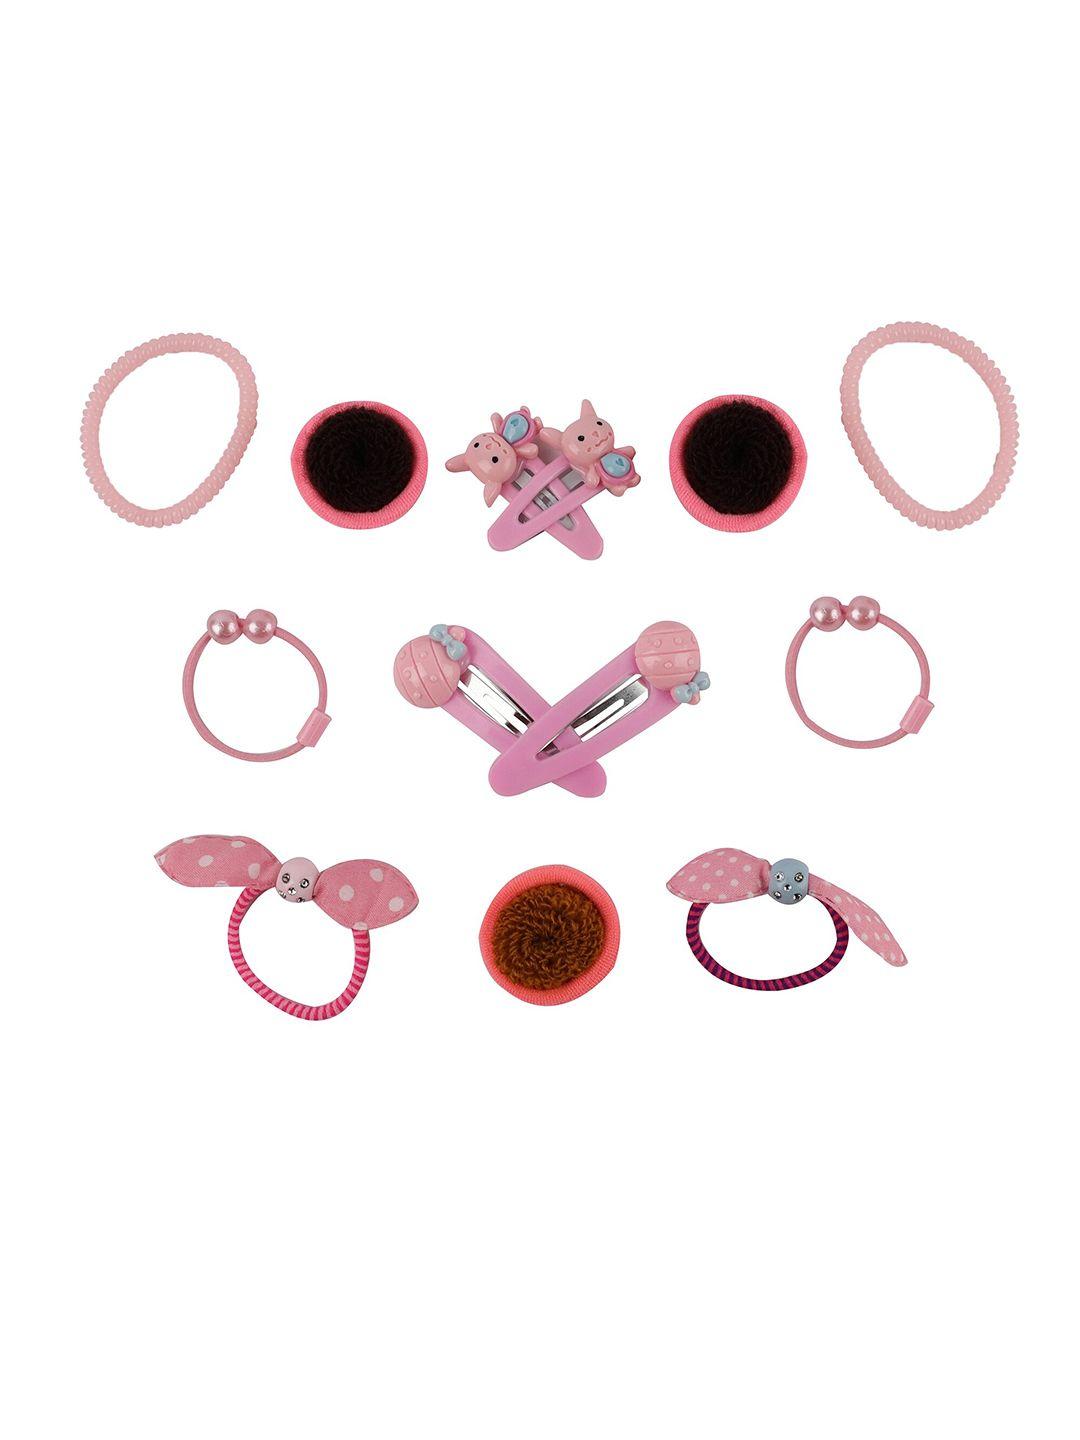 foliyaj girls 16 pieces pink fur hair accessories with bear shape storage box